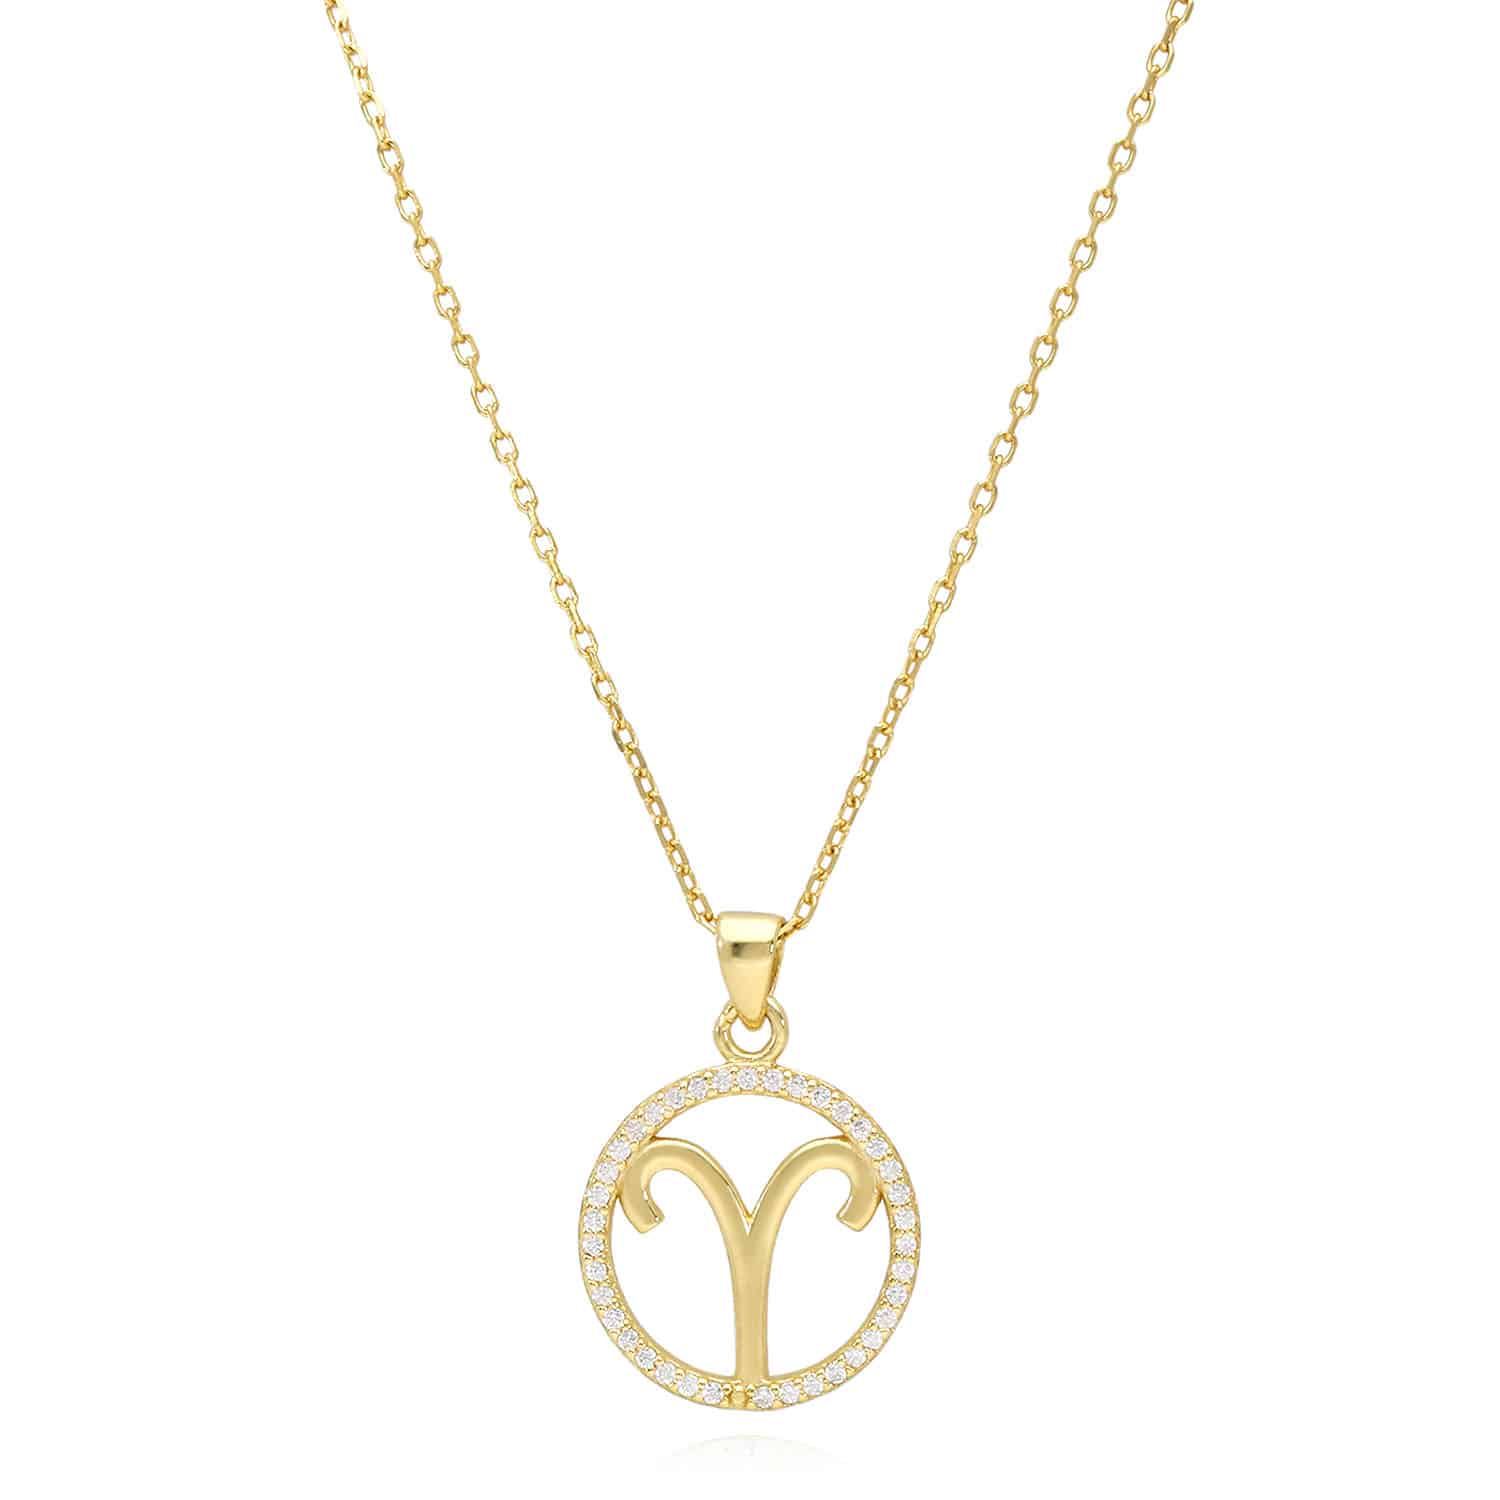 18K Gold Over Silver Simulated Diamond Zodiac Charm Pendant Necklace 16"-18" Adj - Aries